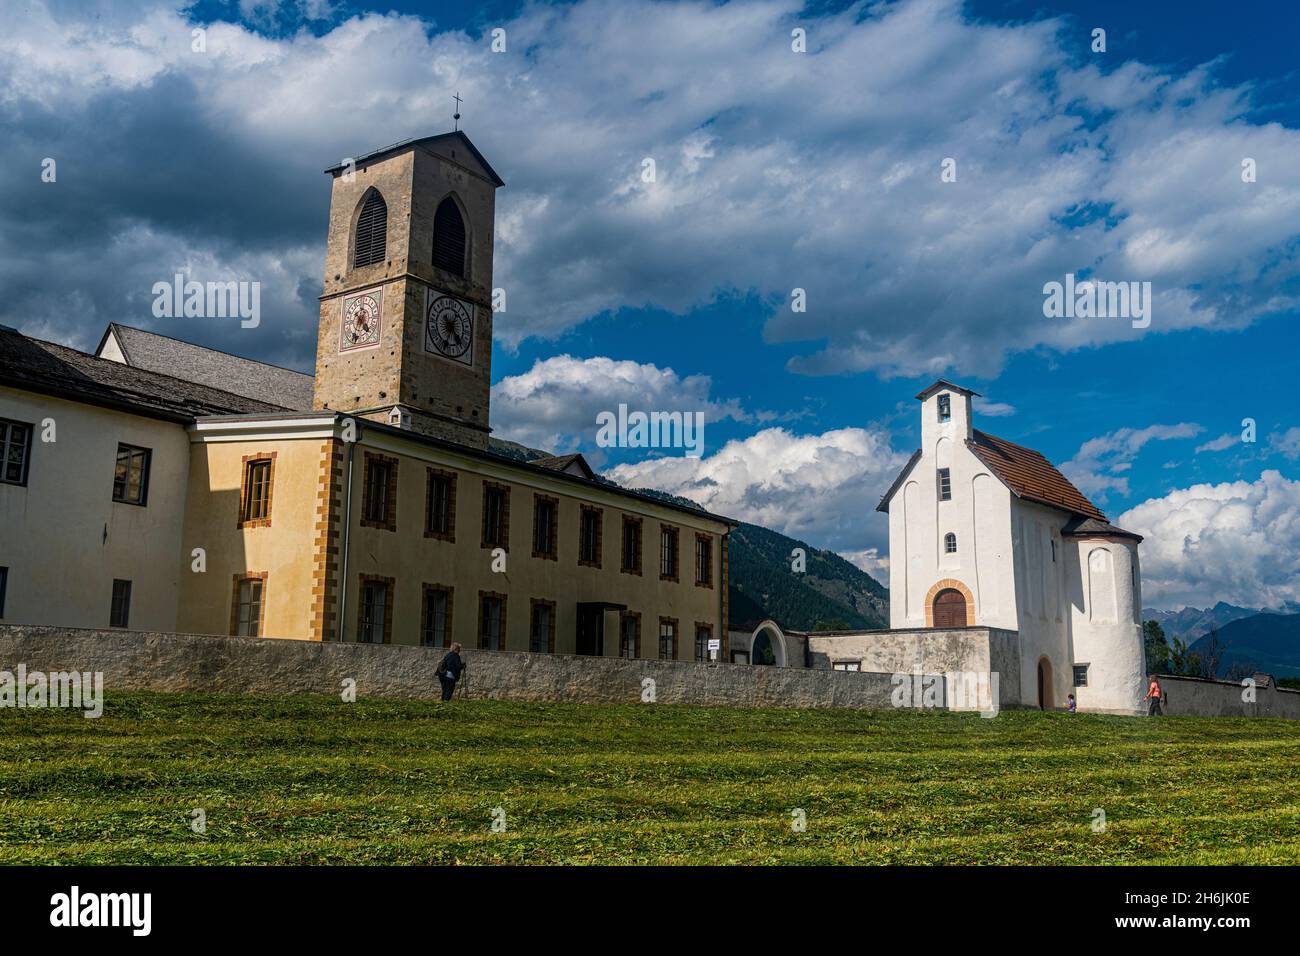 The Benedictine Convent of St. John in Mustair, UNESCO World Heritage Site, Swiss Alps, Switzerland, Europe Stock Photo